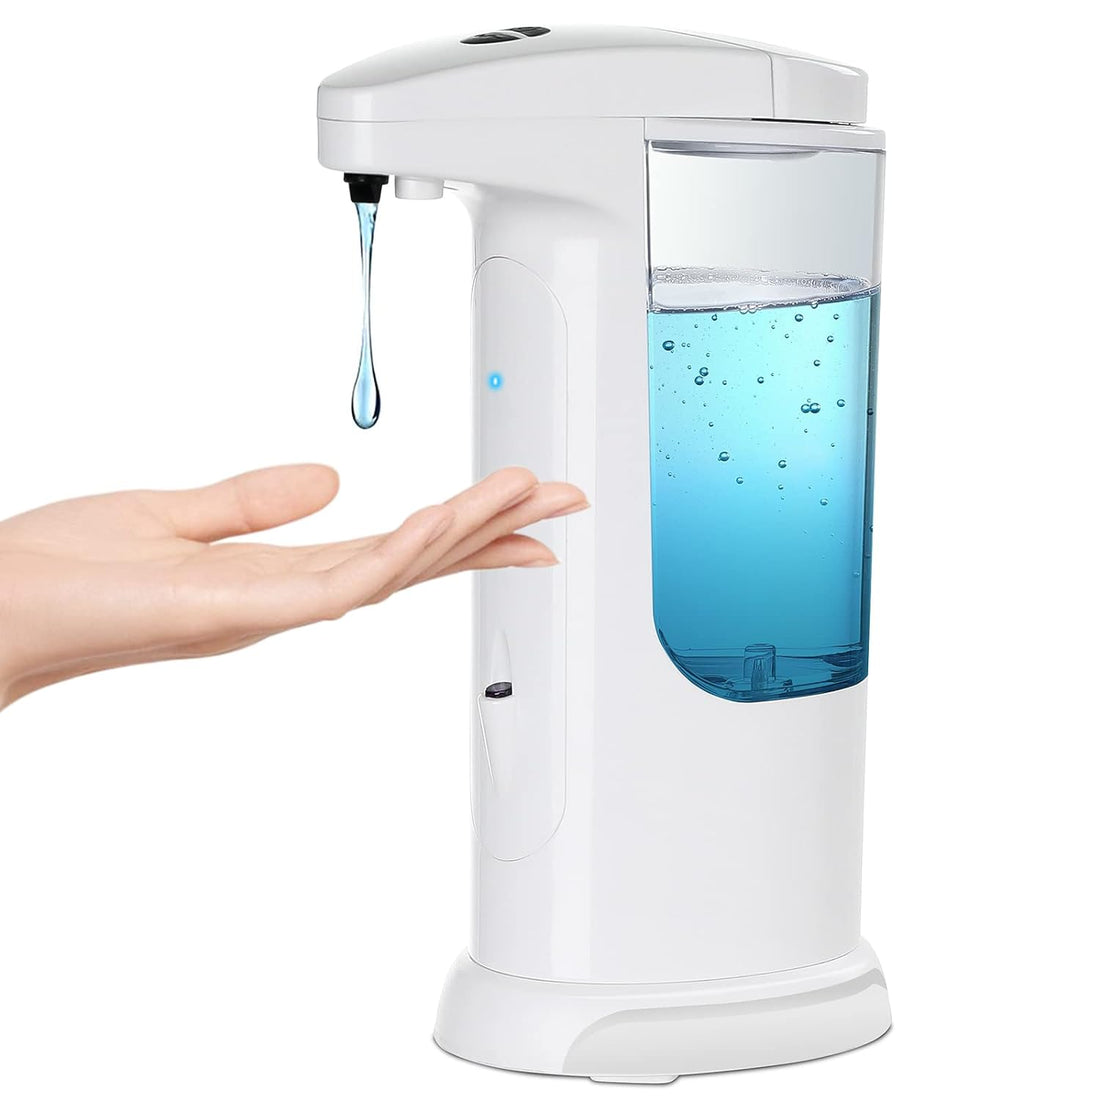 AicLuze Soap Dispenser - Automatic Touchless Liquid Kitchen Soap Dispenser with Waterproof Base, Infrared Motion Sensor Dish Liquid Hands-Free Auto Soap Dispenser